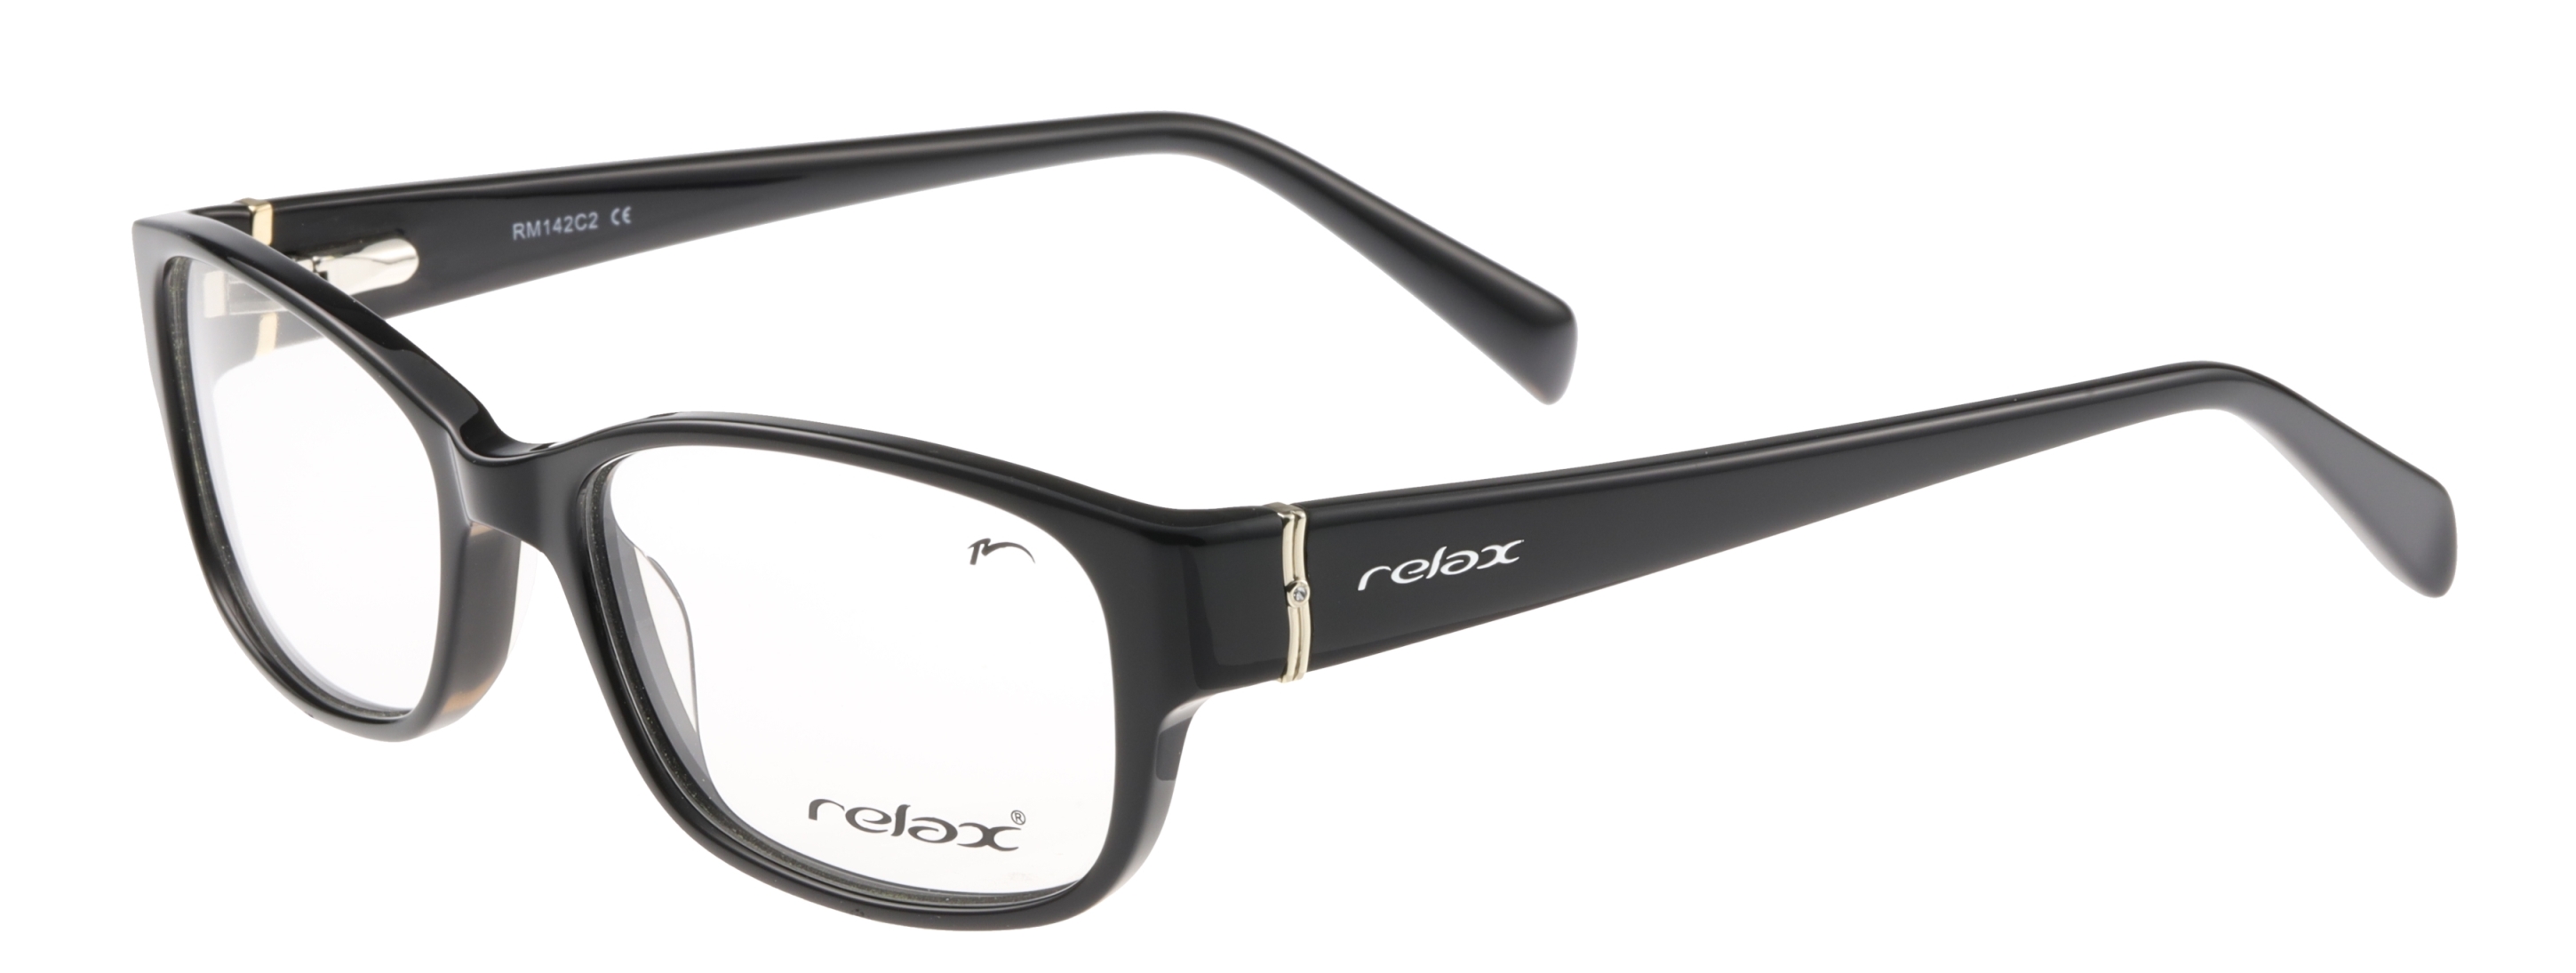 Optical frames Relax Venice RM142C2